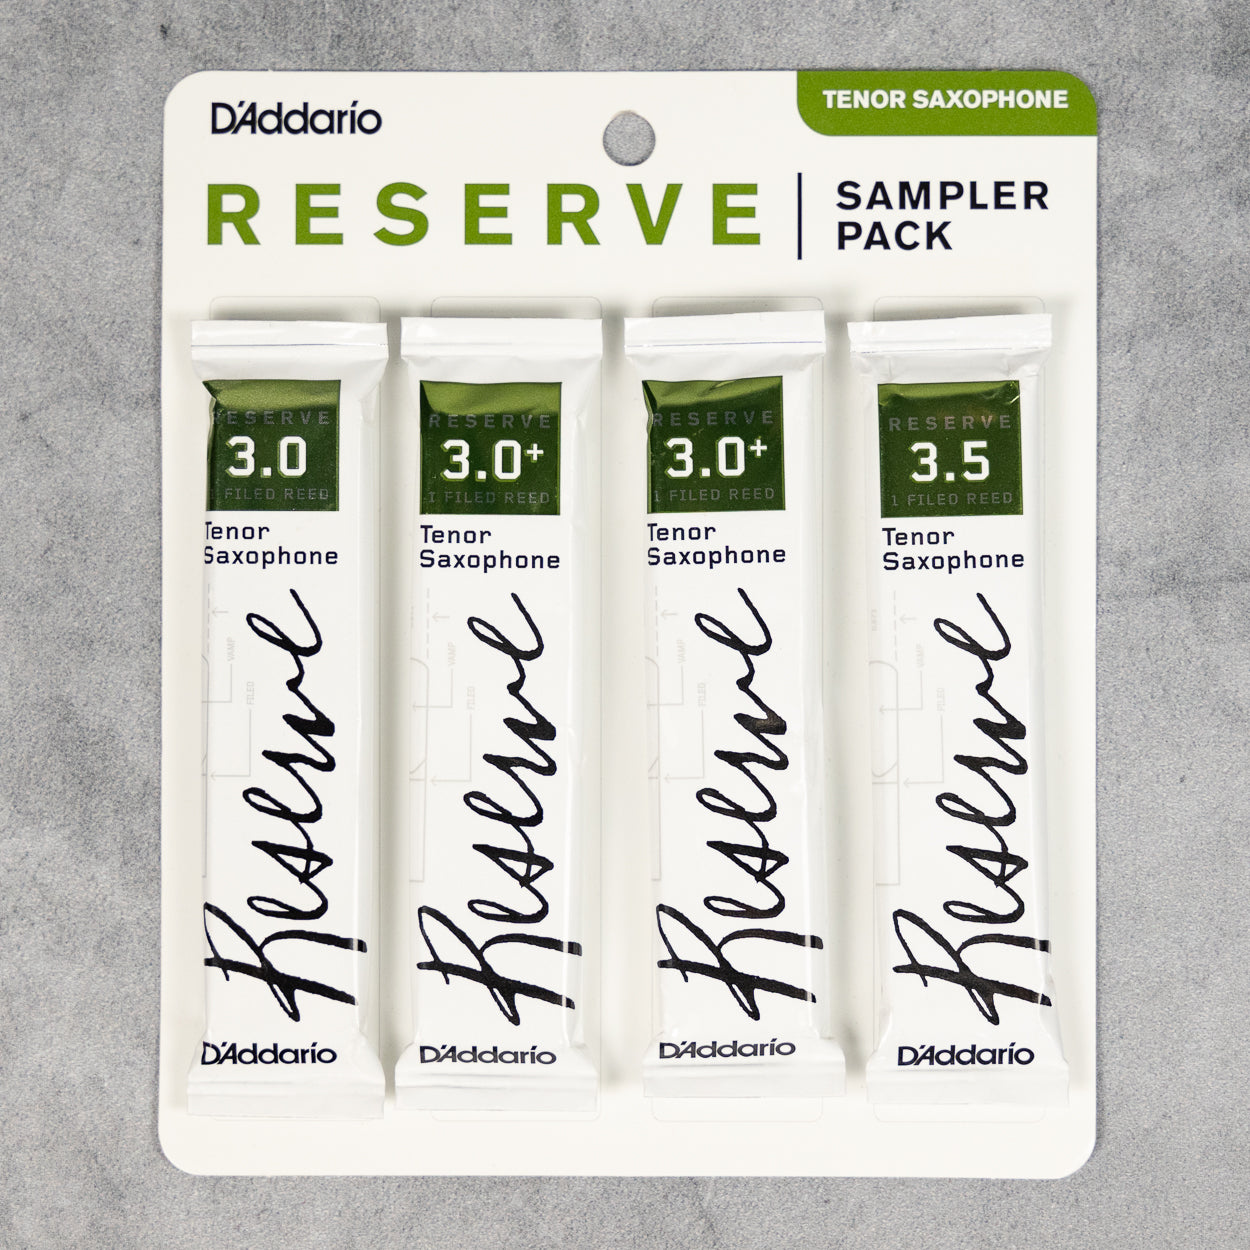 D'Addario Reserve Tenor Saxophone Reed Sampler Pack, Size 3.0/3.0+/3.5 (Pack of 4)